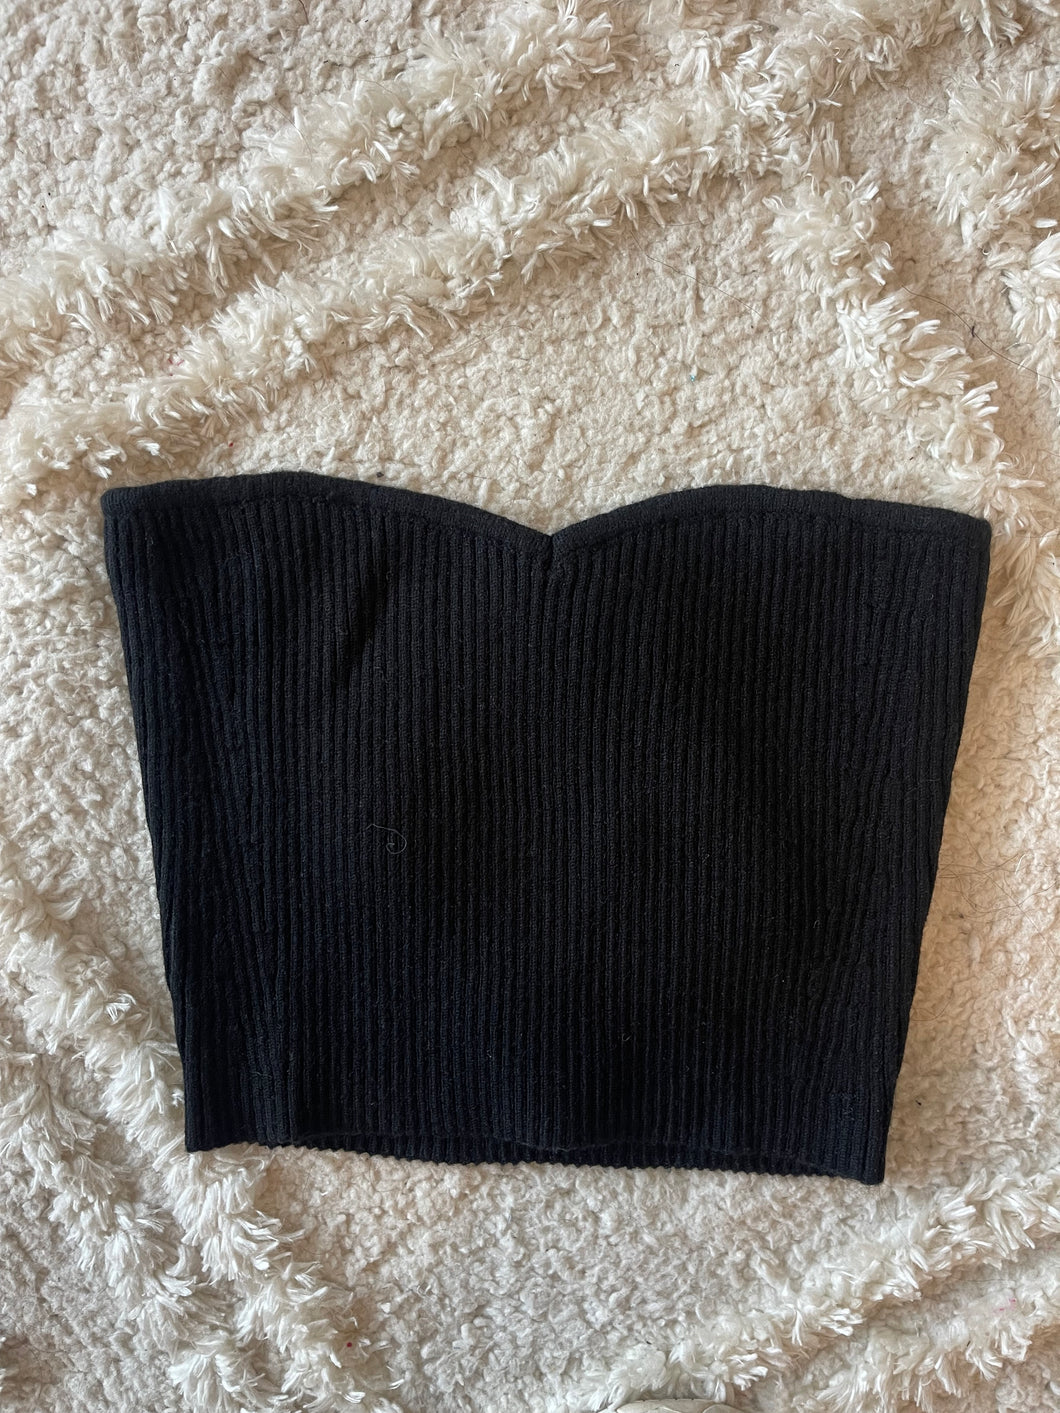 Black Strapless Knit Top